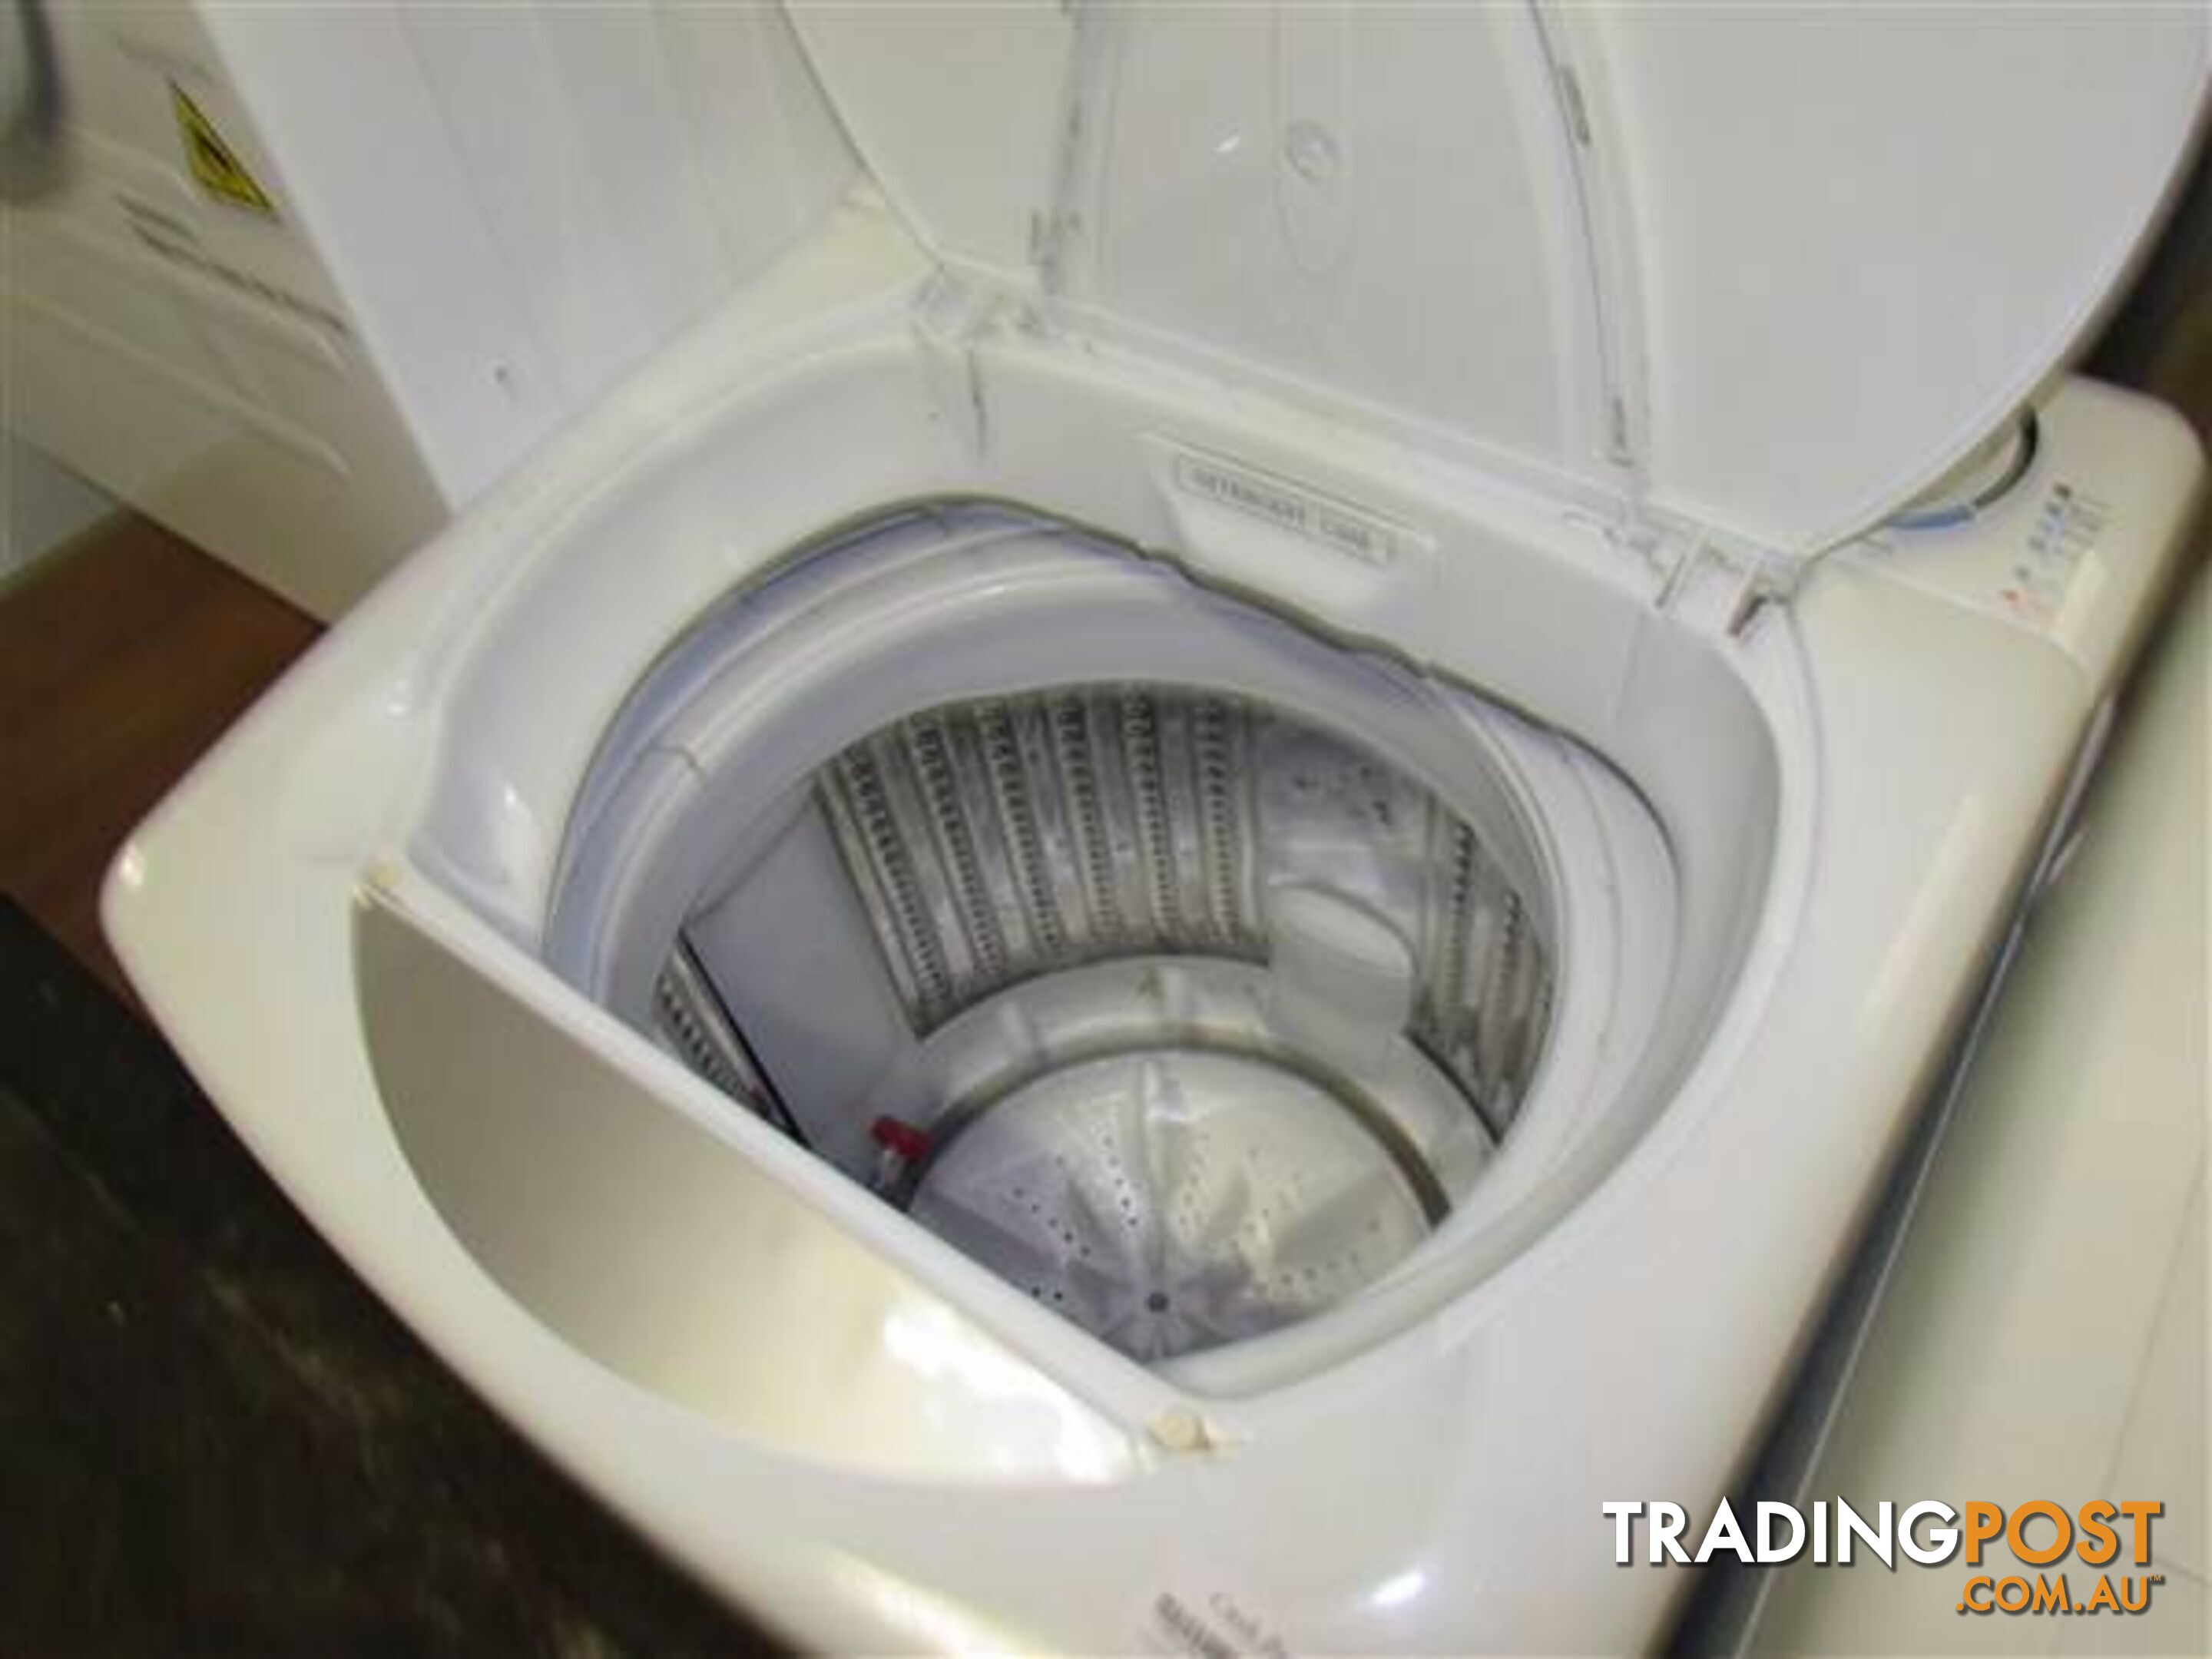 Quality Homemaker HMWM72 7kg Top Loader Washing Machine !!!